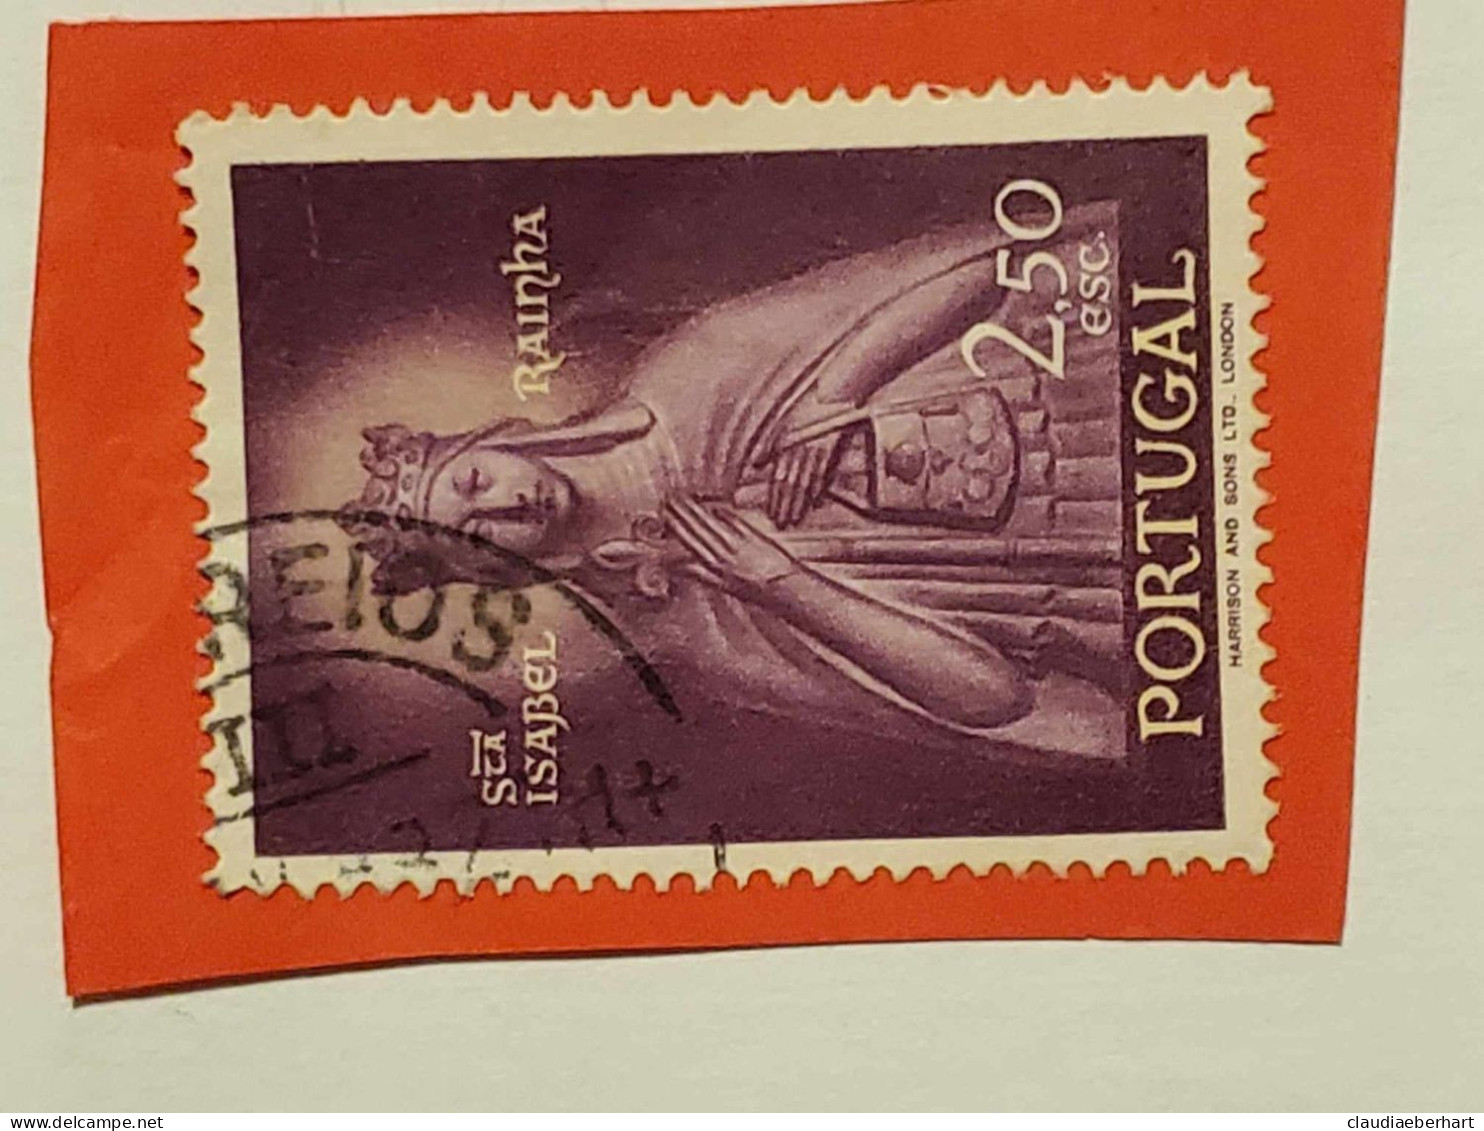 Santa Isabella - Used Stamps